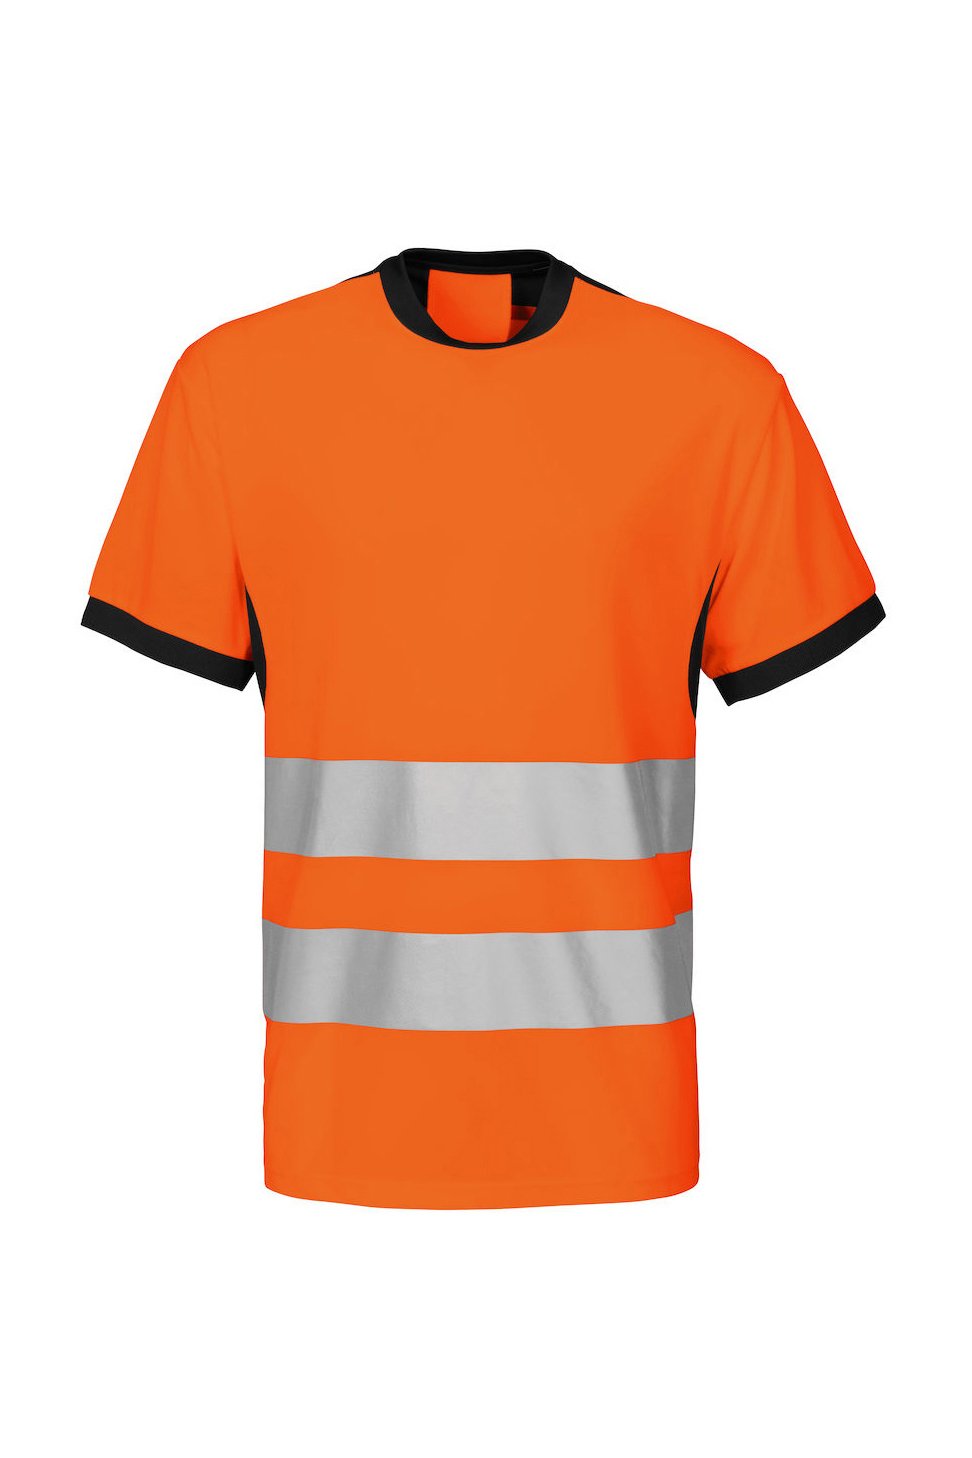 T-Shirt EN ISO 20471 Klasse 2, orange/schwarz